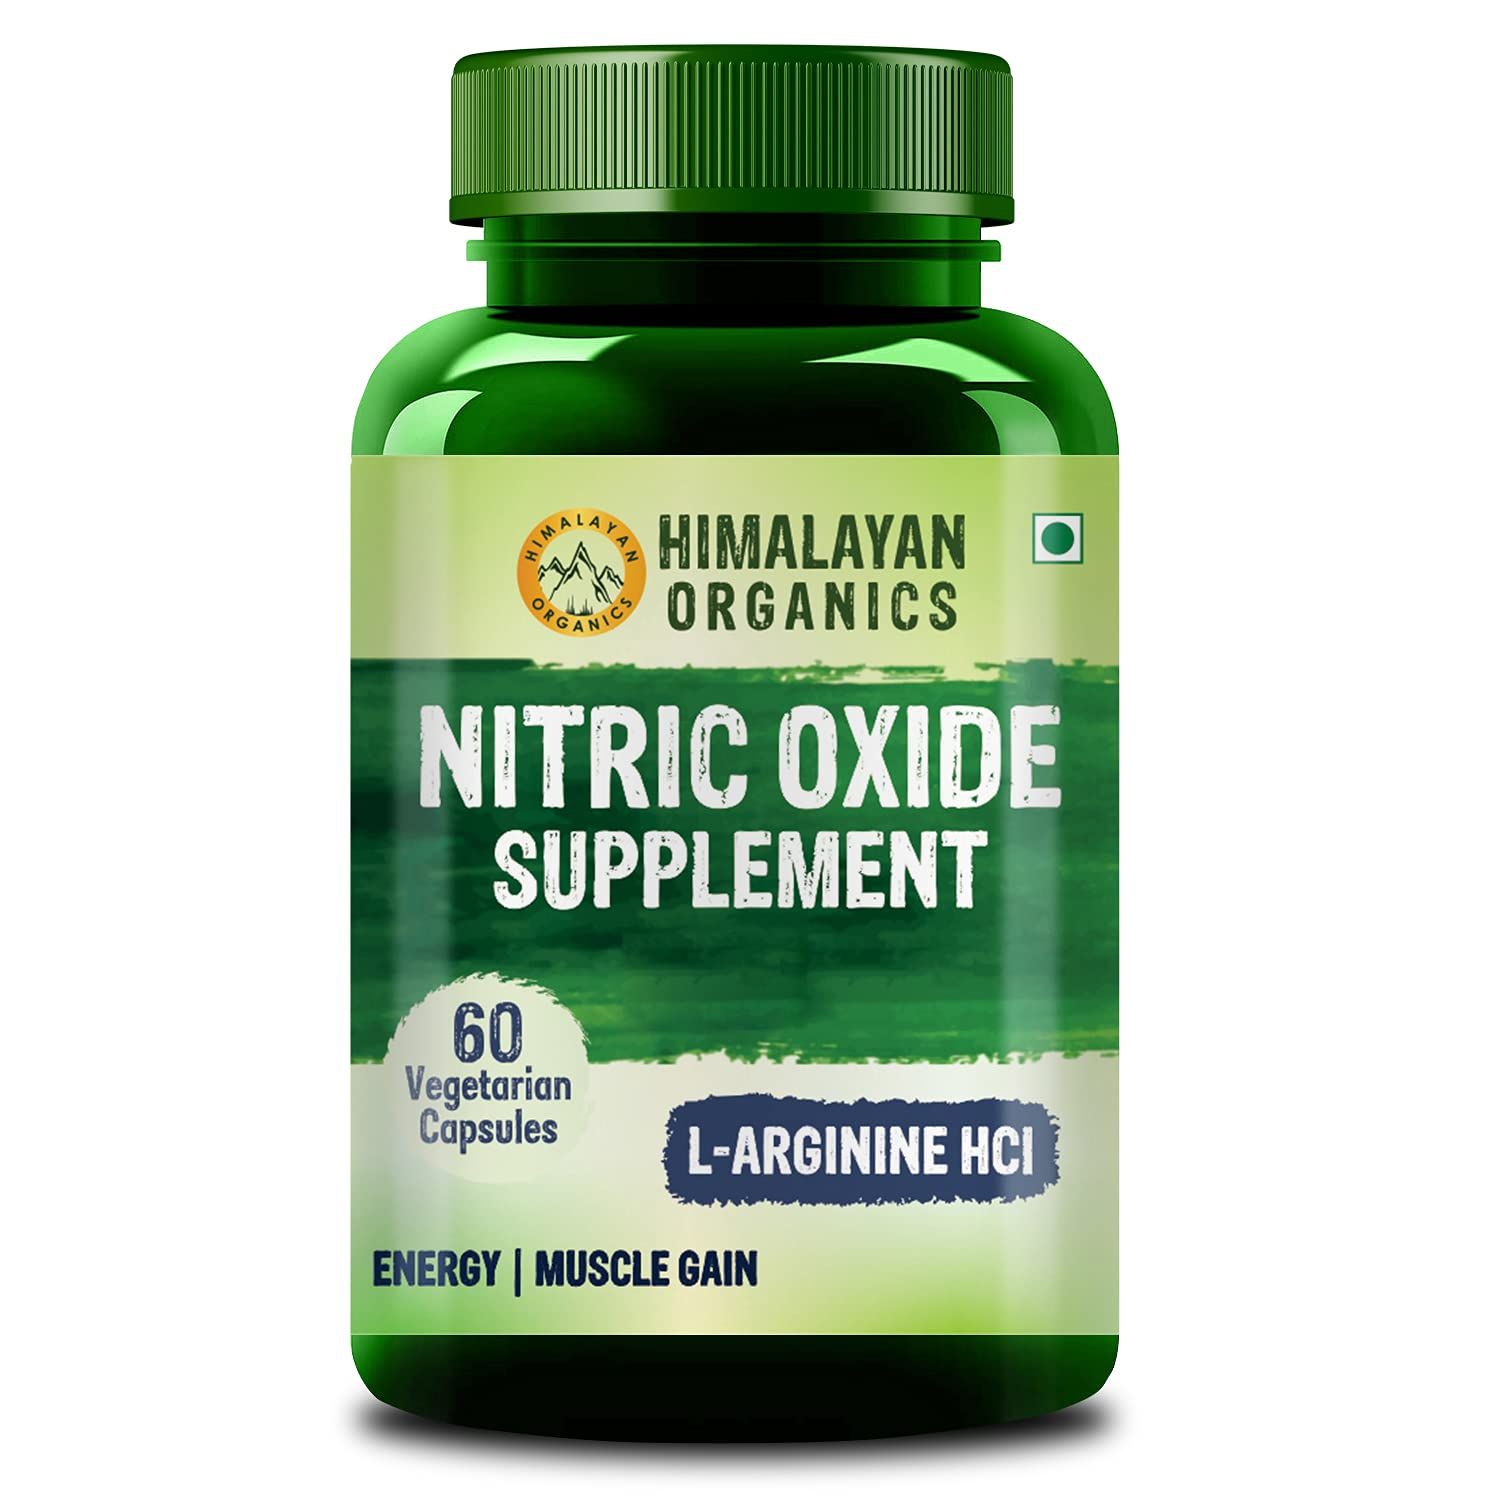 Himalayan Organics Nitric Oxide Supplement Image